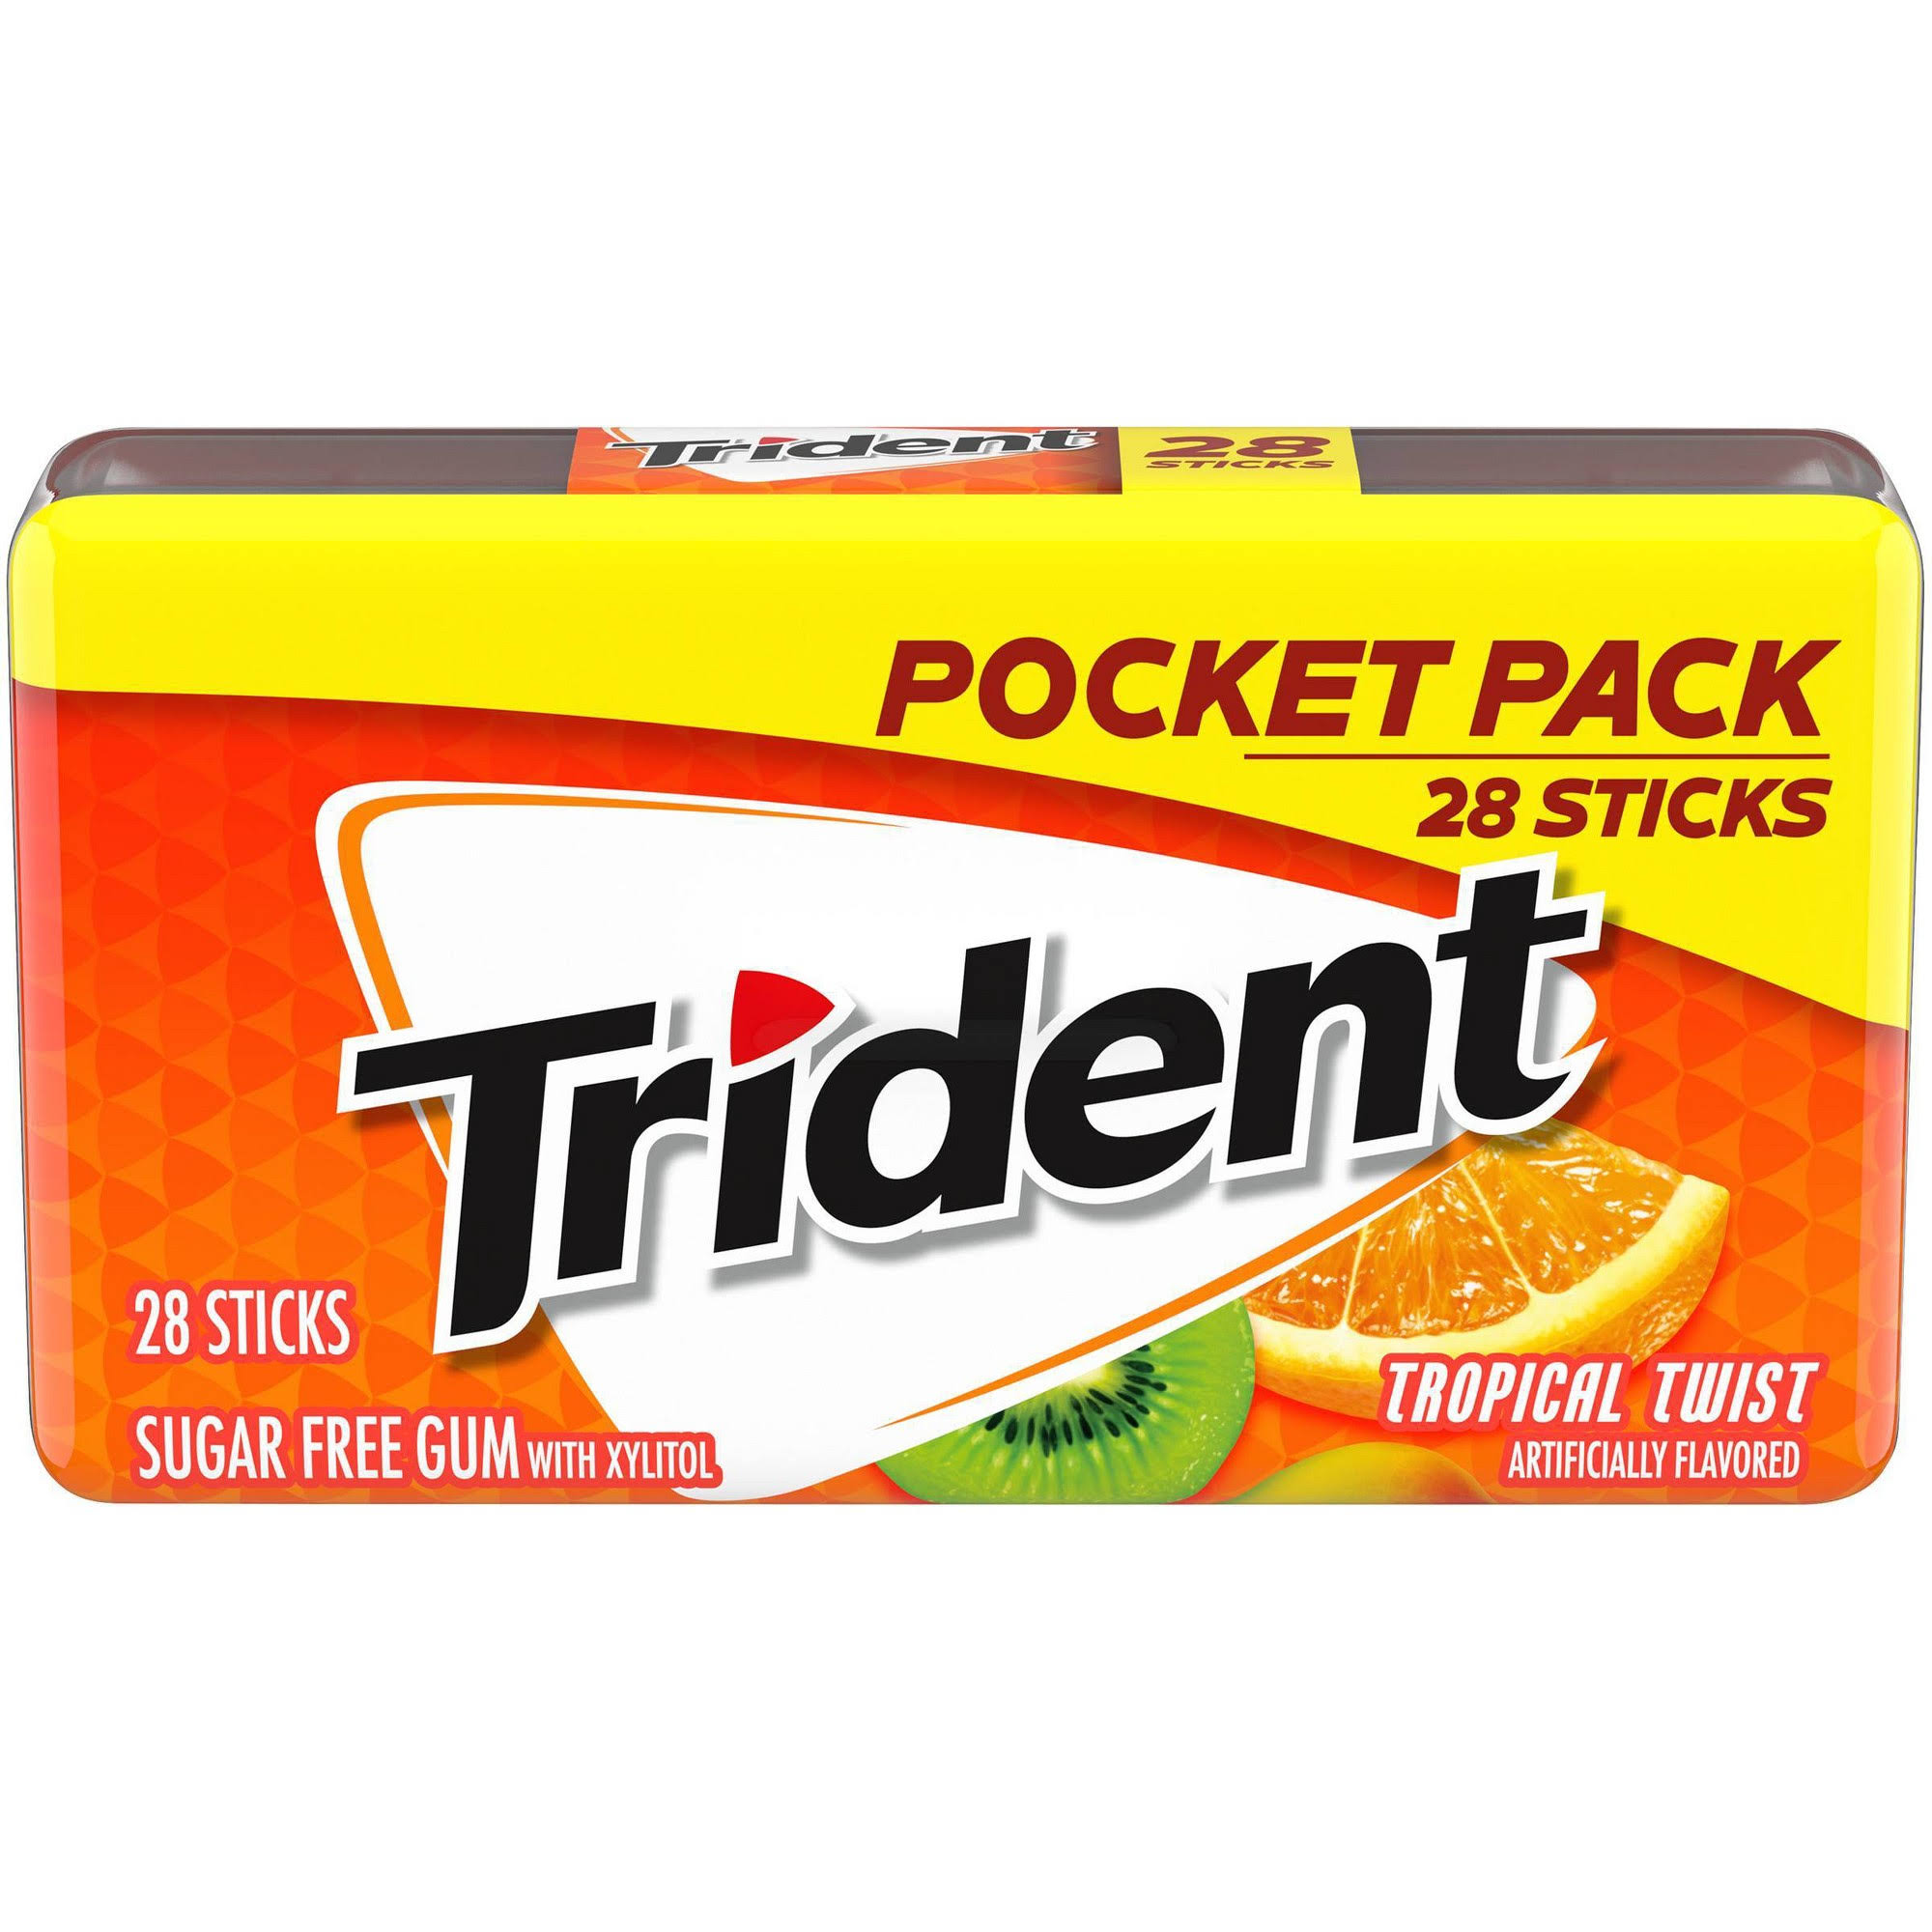 Trident Gum with Xylitol, Sugar Free, Tropical Twist, Pocket Pack - 28 sticks